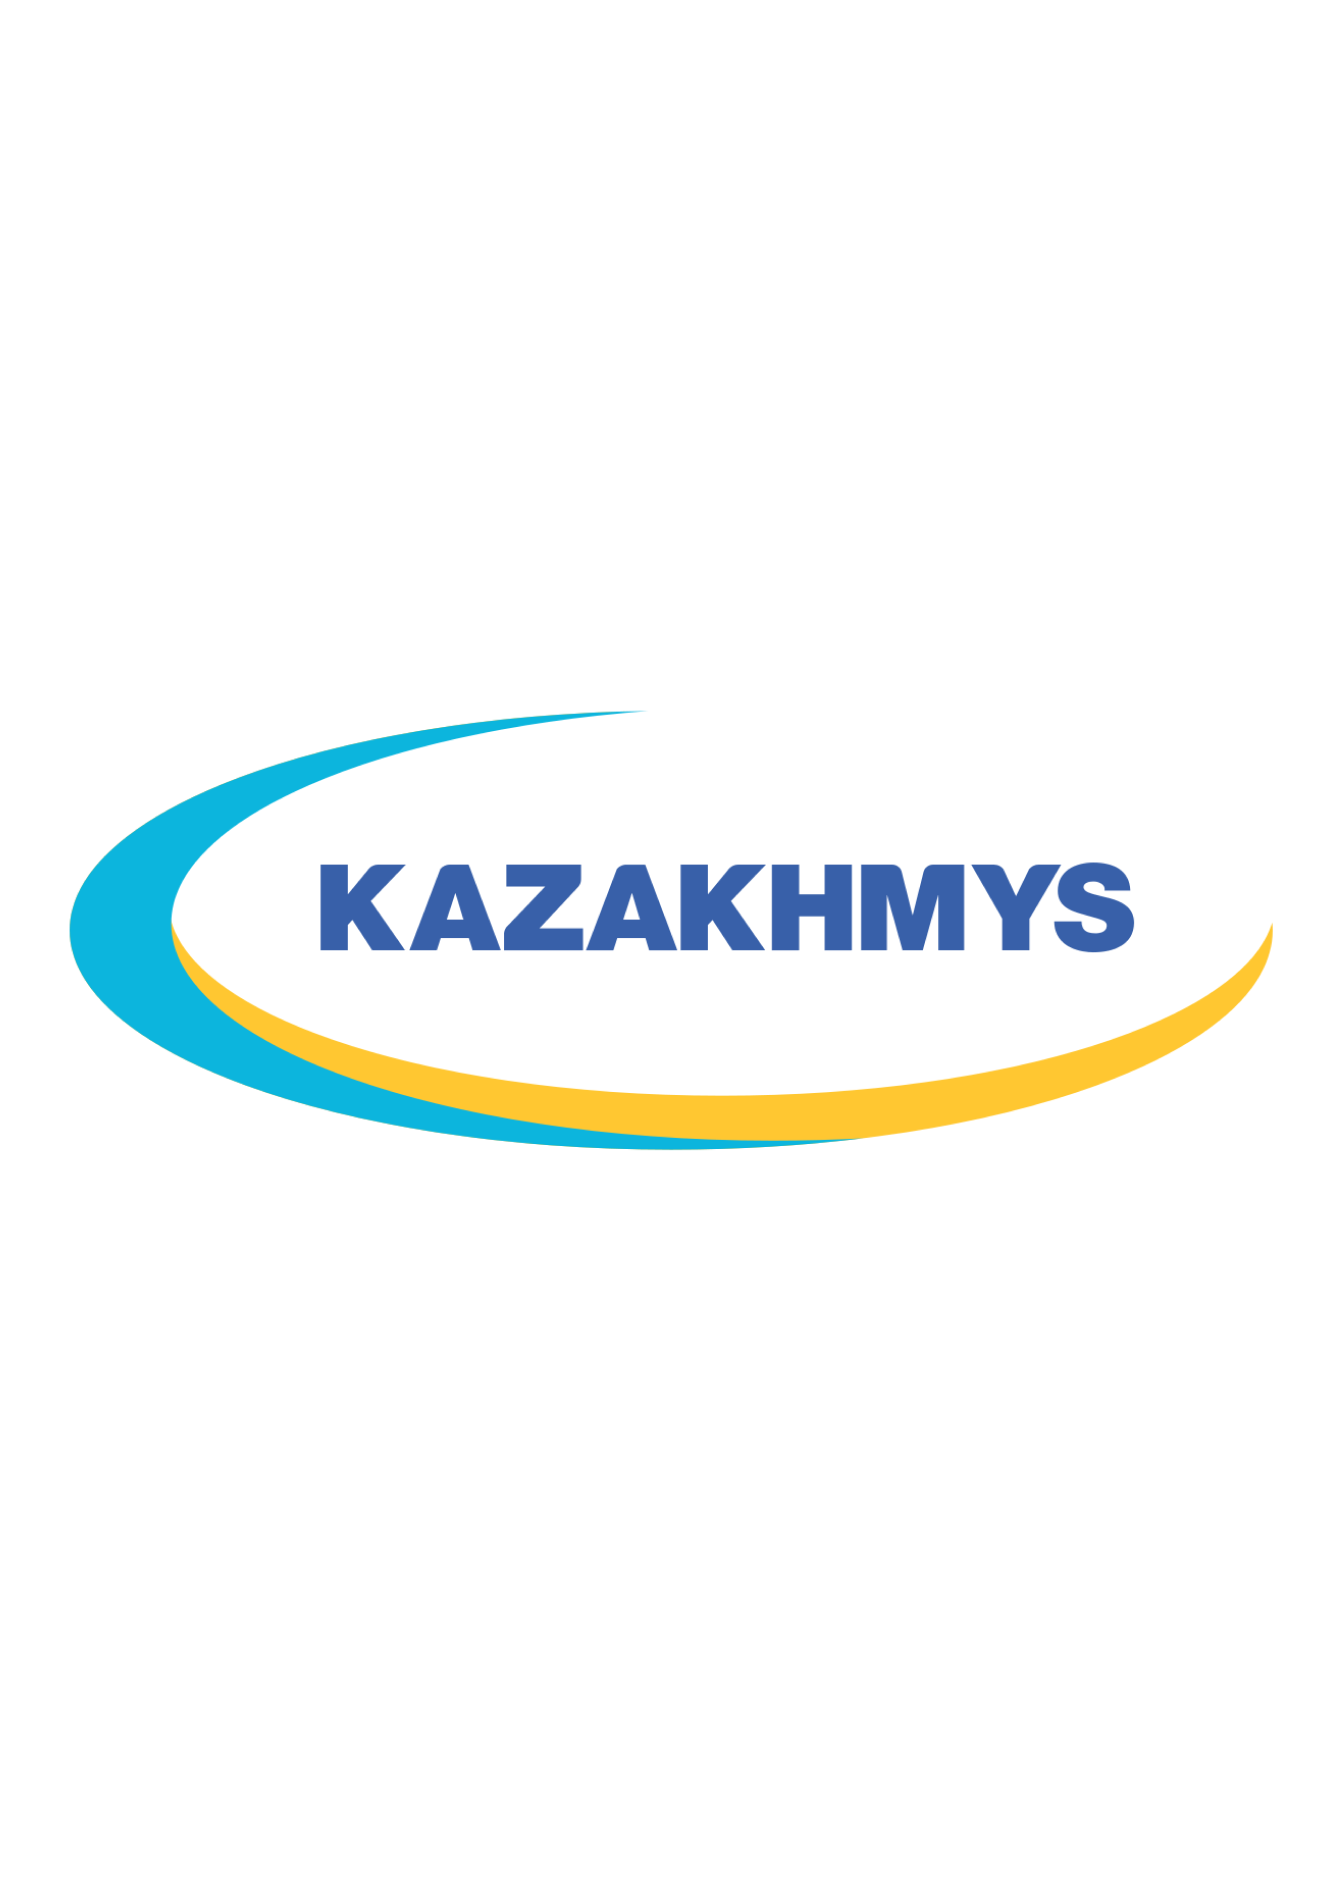 Kazakhmys Меценат Дом Мамы г.Жезказган, с 2020 г.